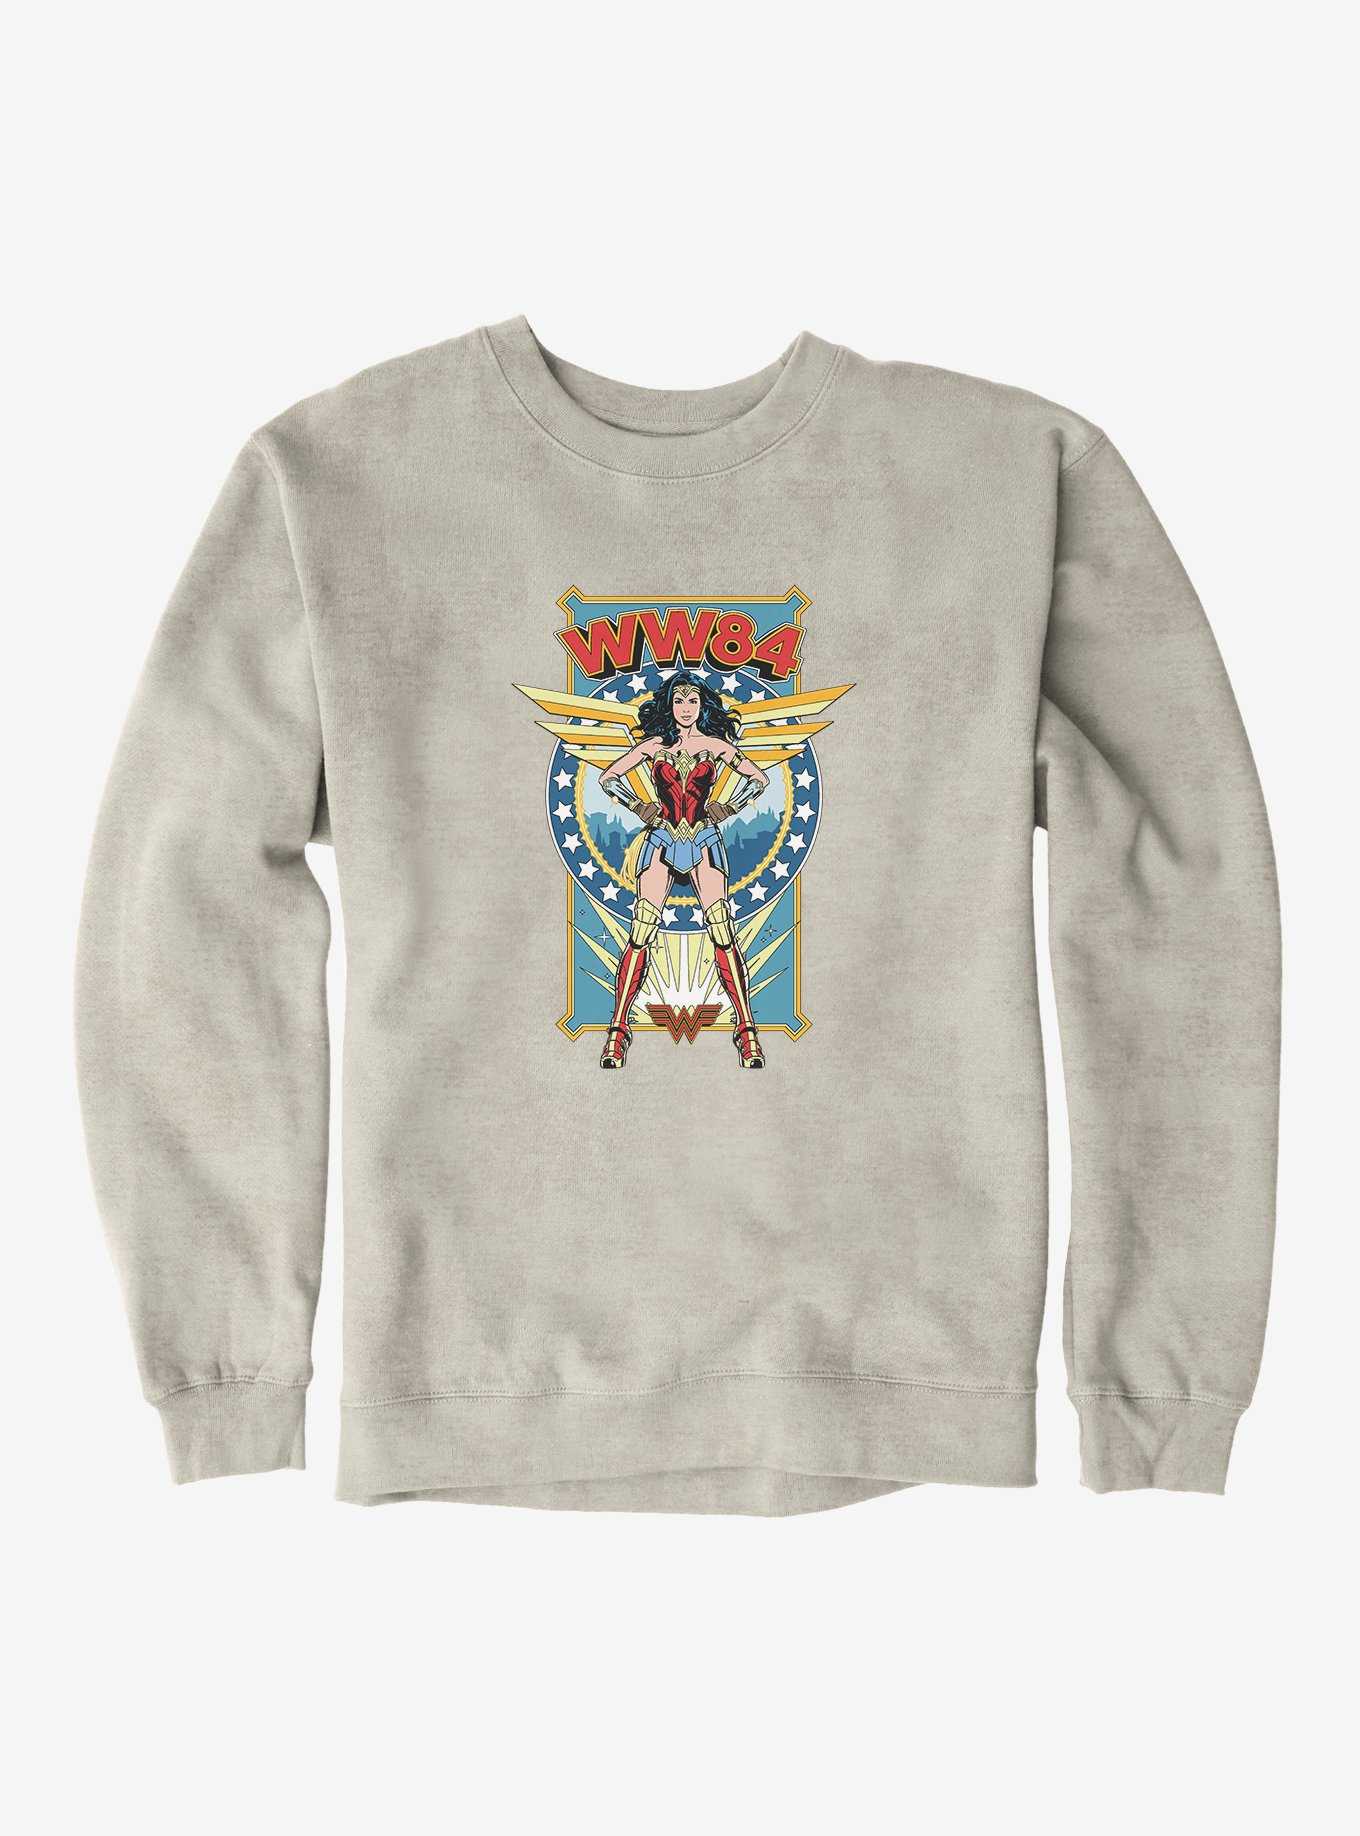 Hot Topic DC Comics Wonder Woman Vintage Girls Slouchy Sweatshirt